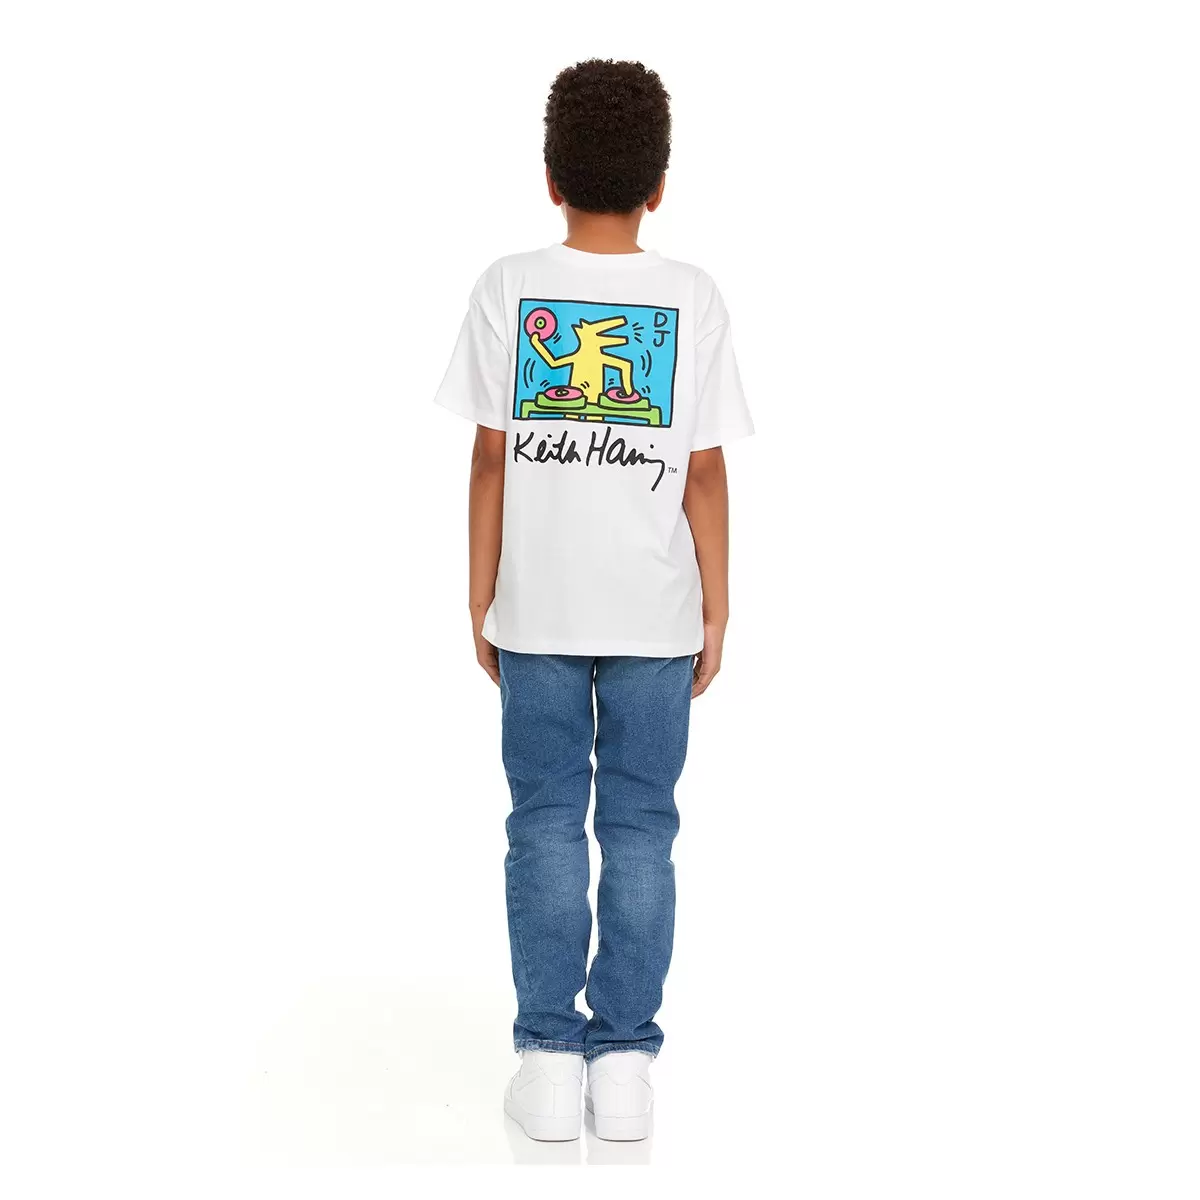 Keith Haring 兒童短袖上衣三件組 藍 XL